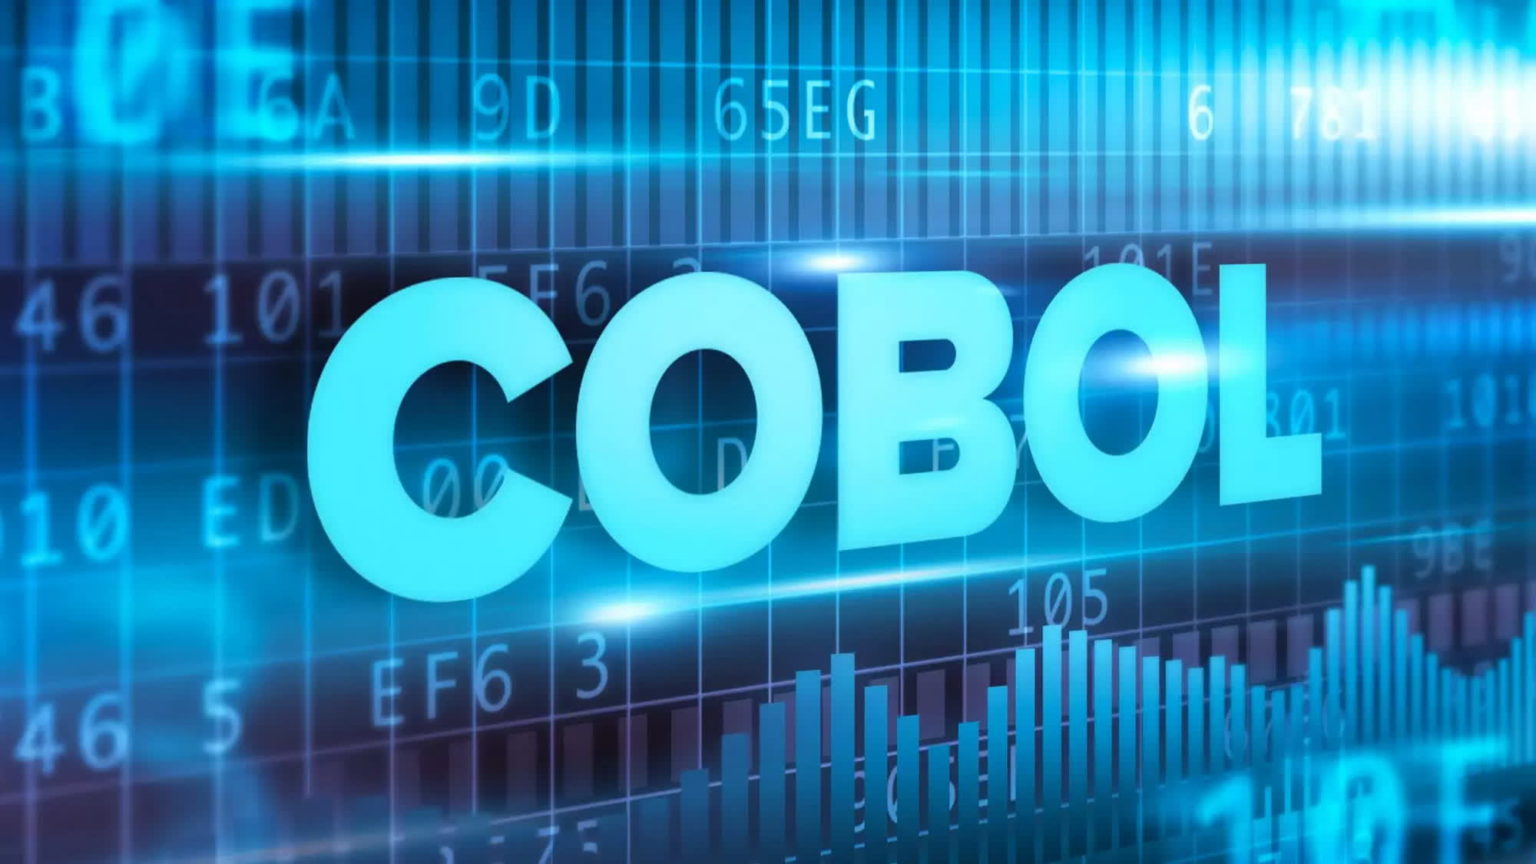 IBM assures AI-powered Cobol translator in Watsonx will not replace developers